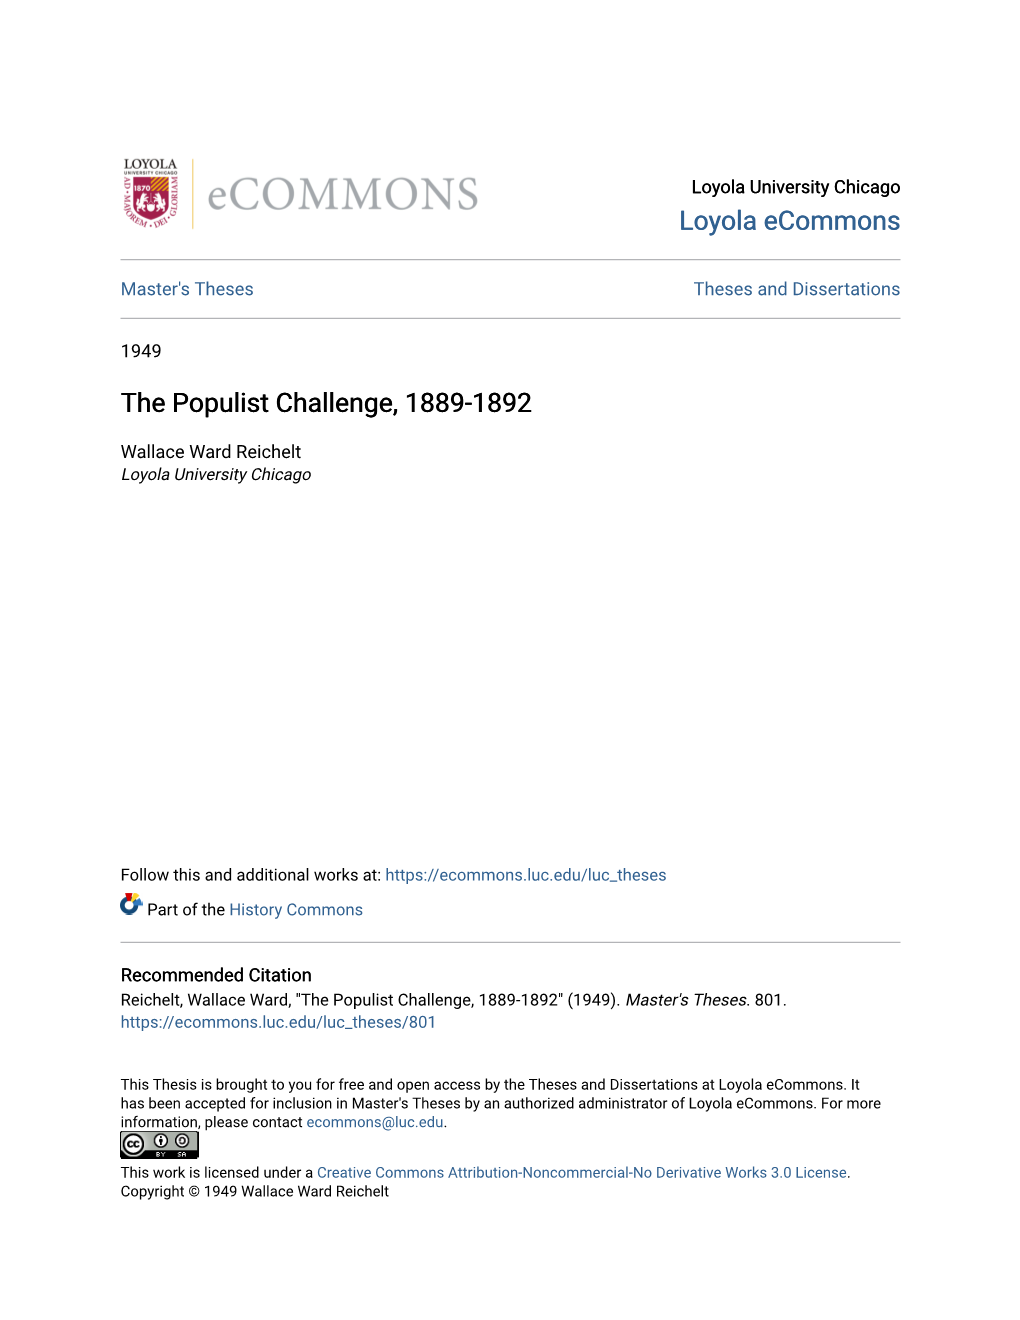 The Populist Challenge, 1889-1892